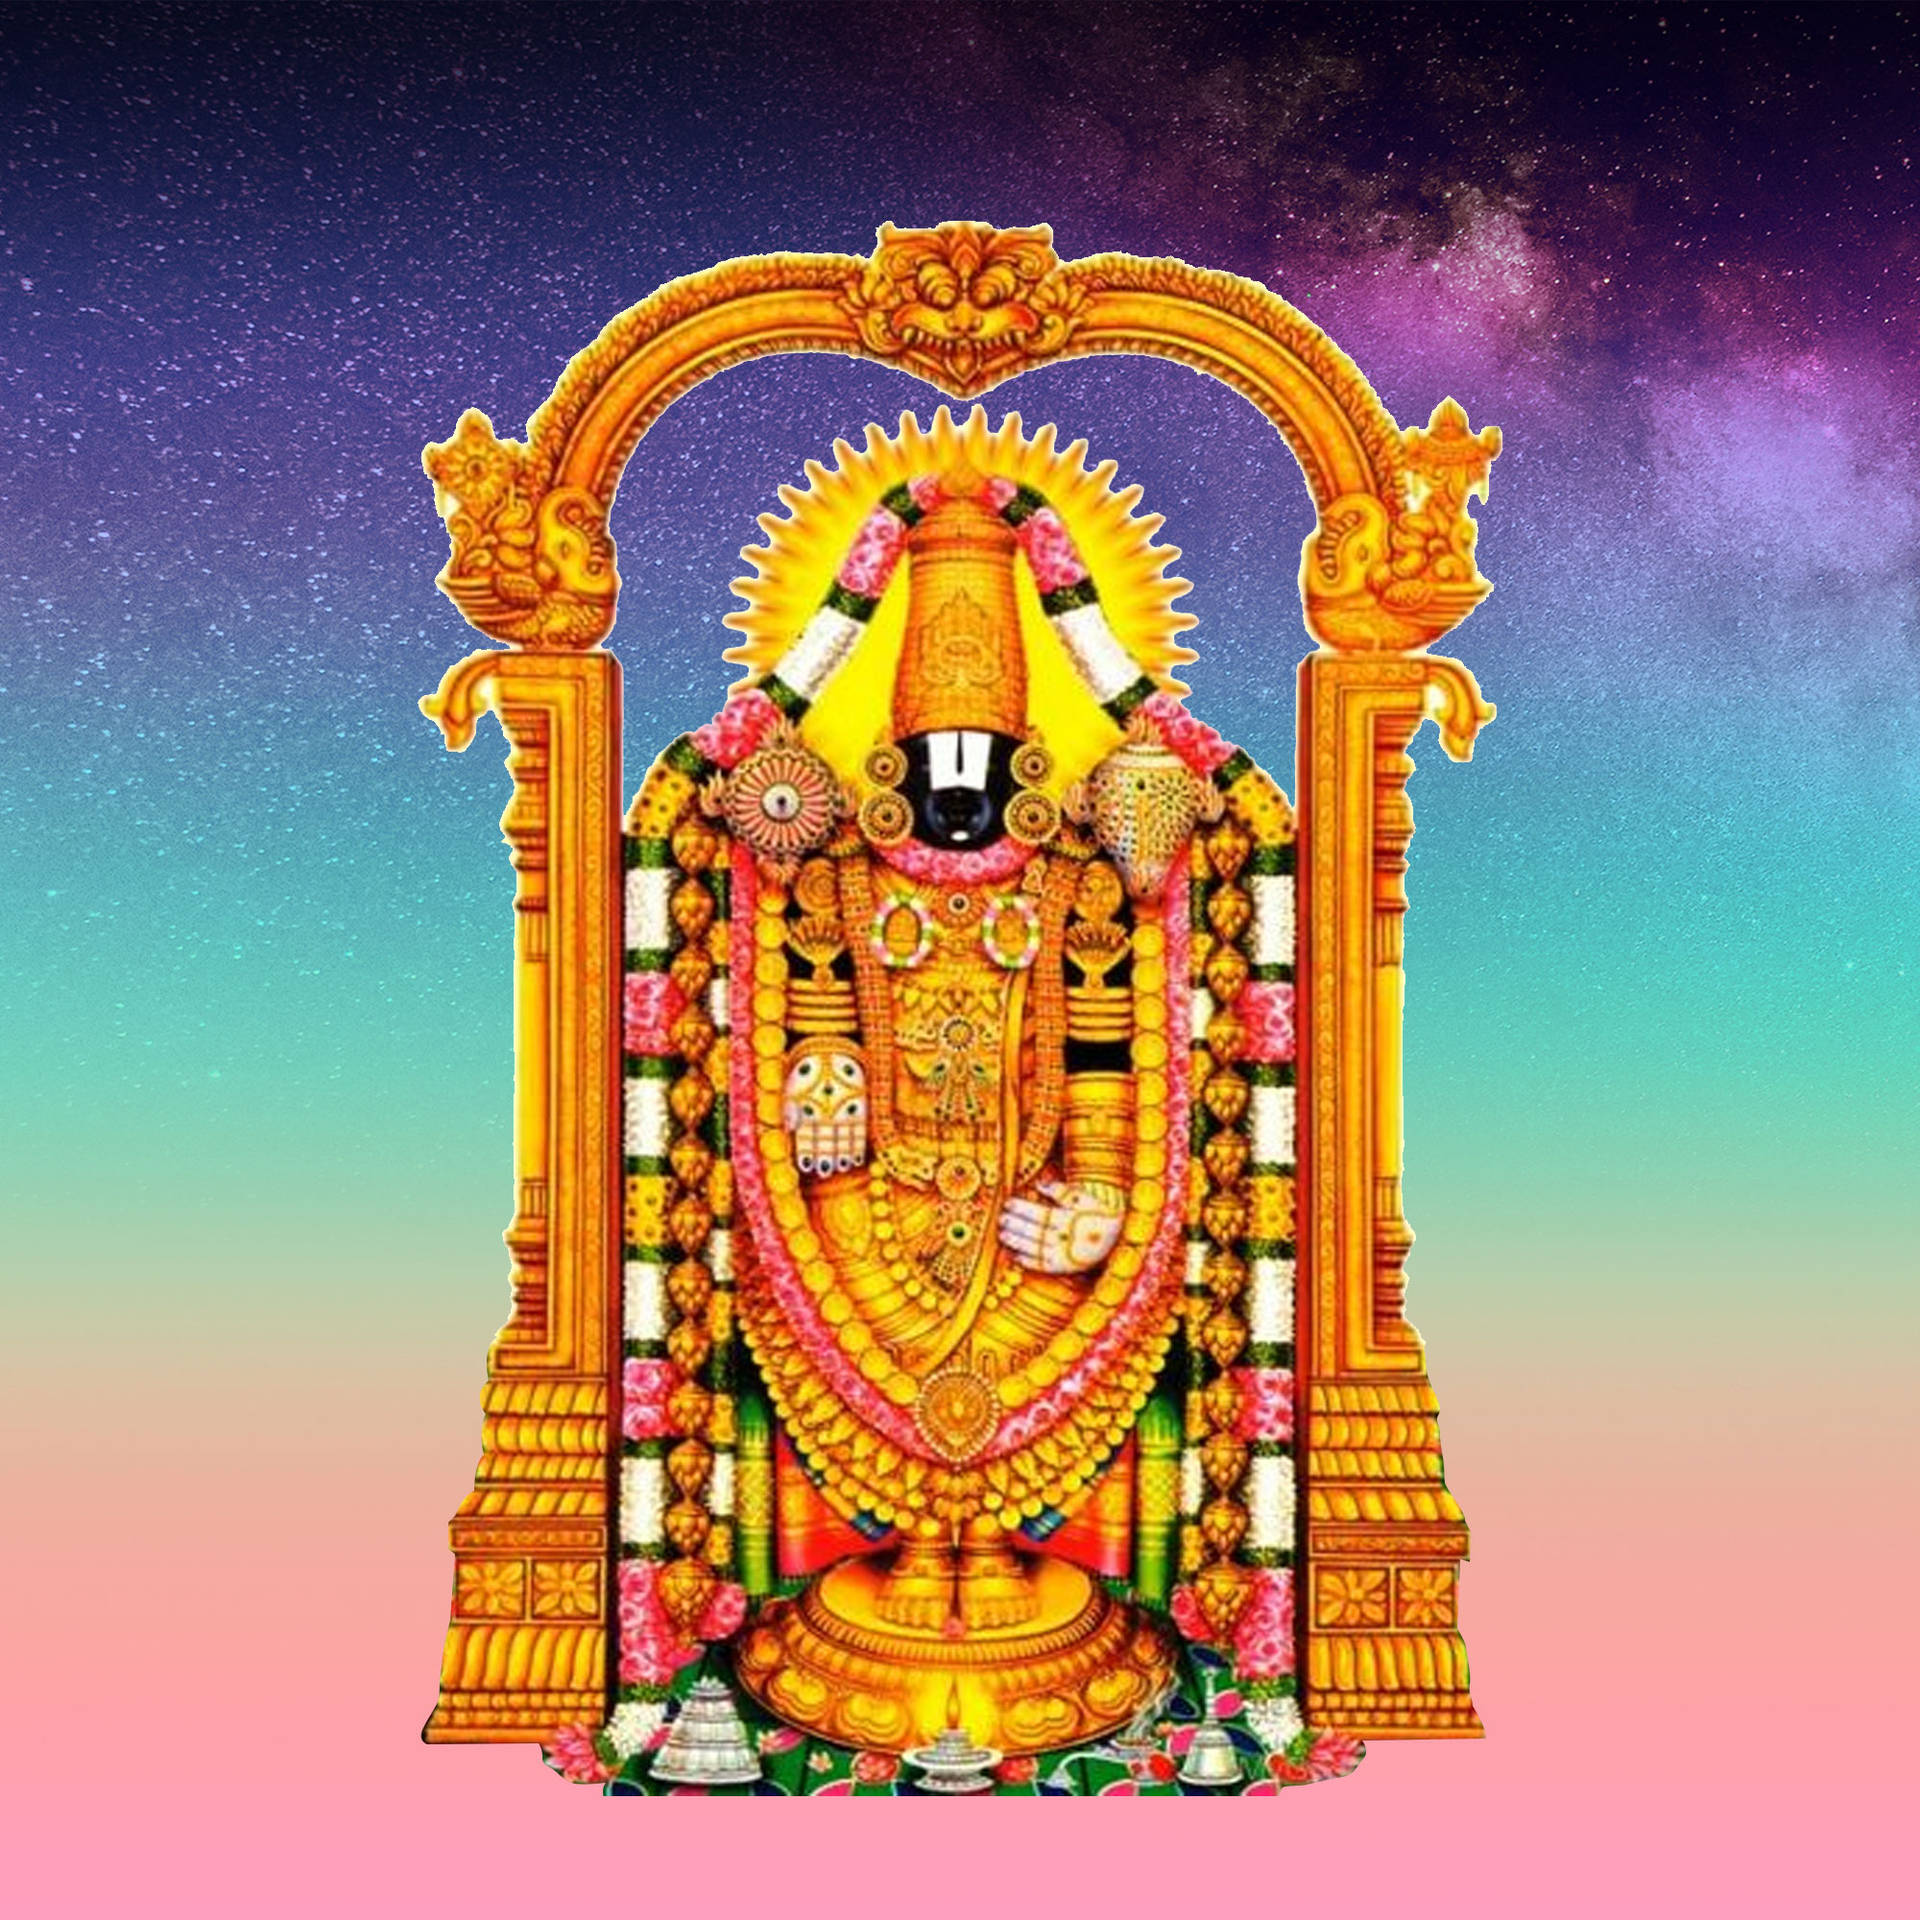 Venkateswara Swamy Deity Of Hindu Religion